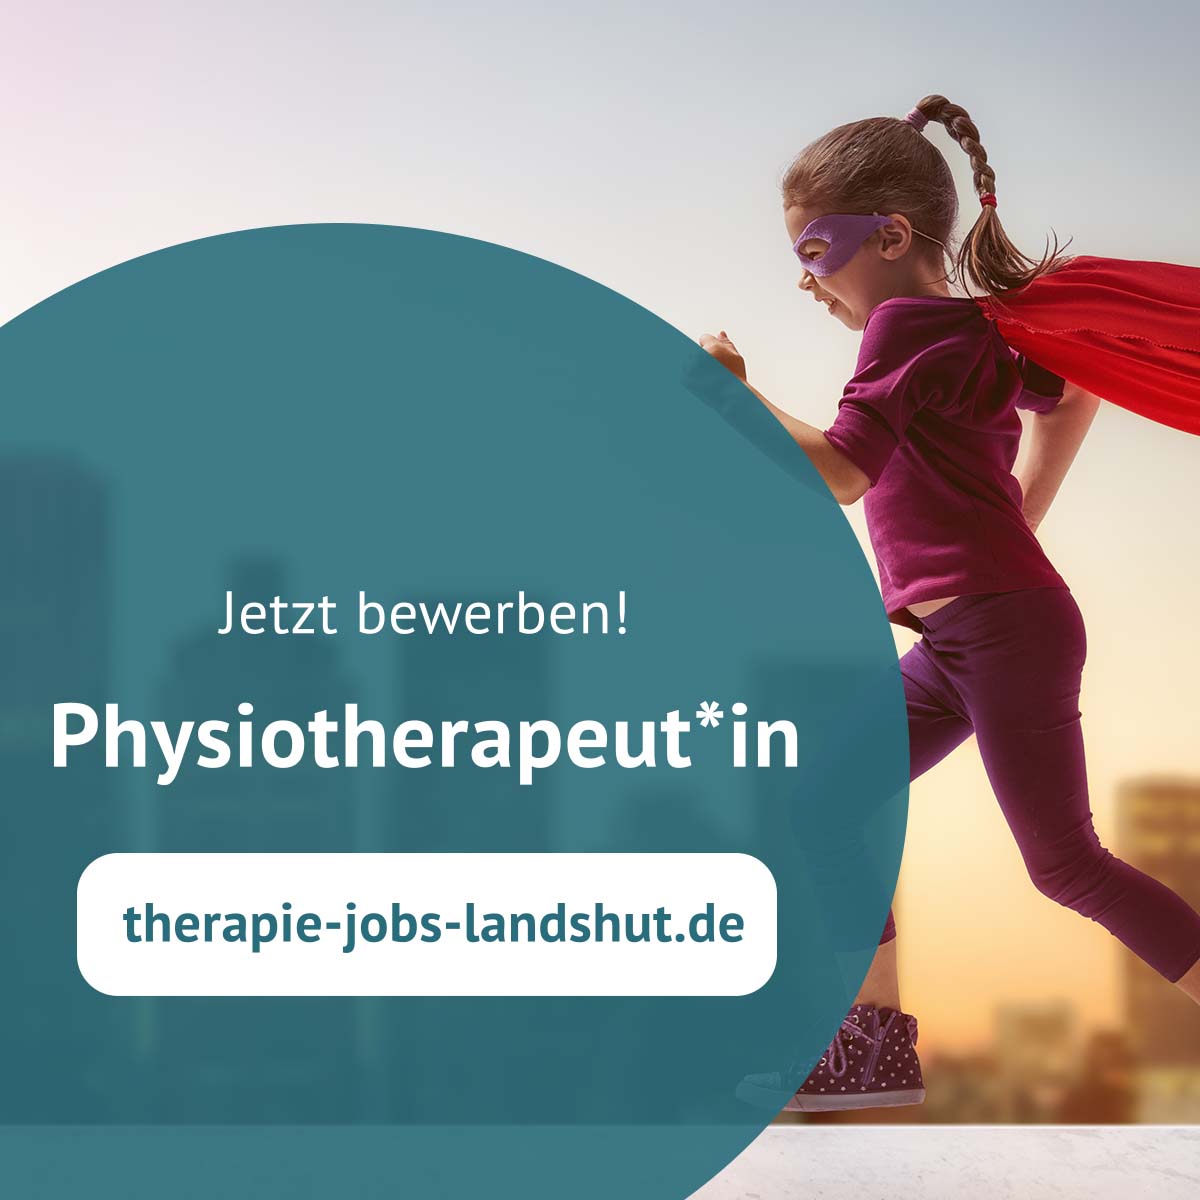 Stellenangebot Physiotherapeutin Physiotherapeut In Landshut